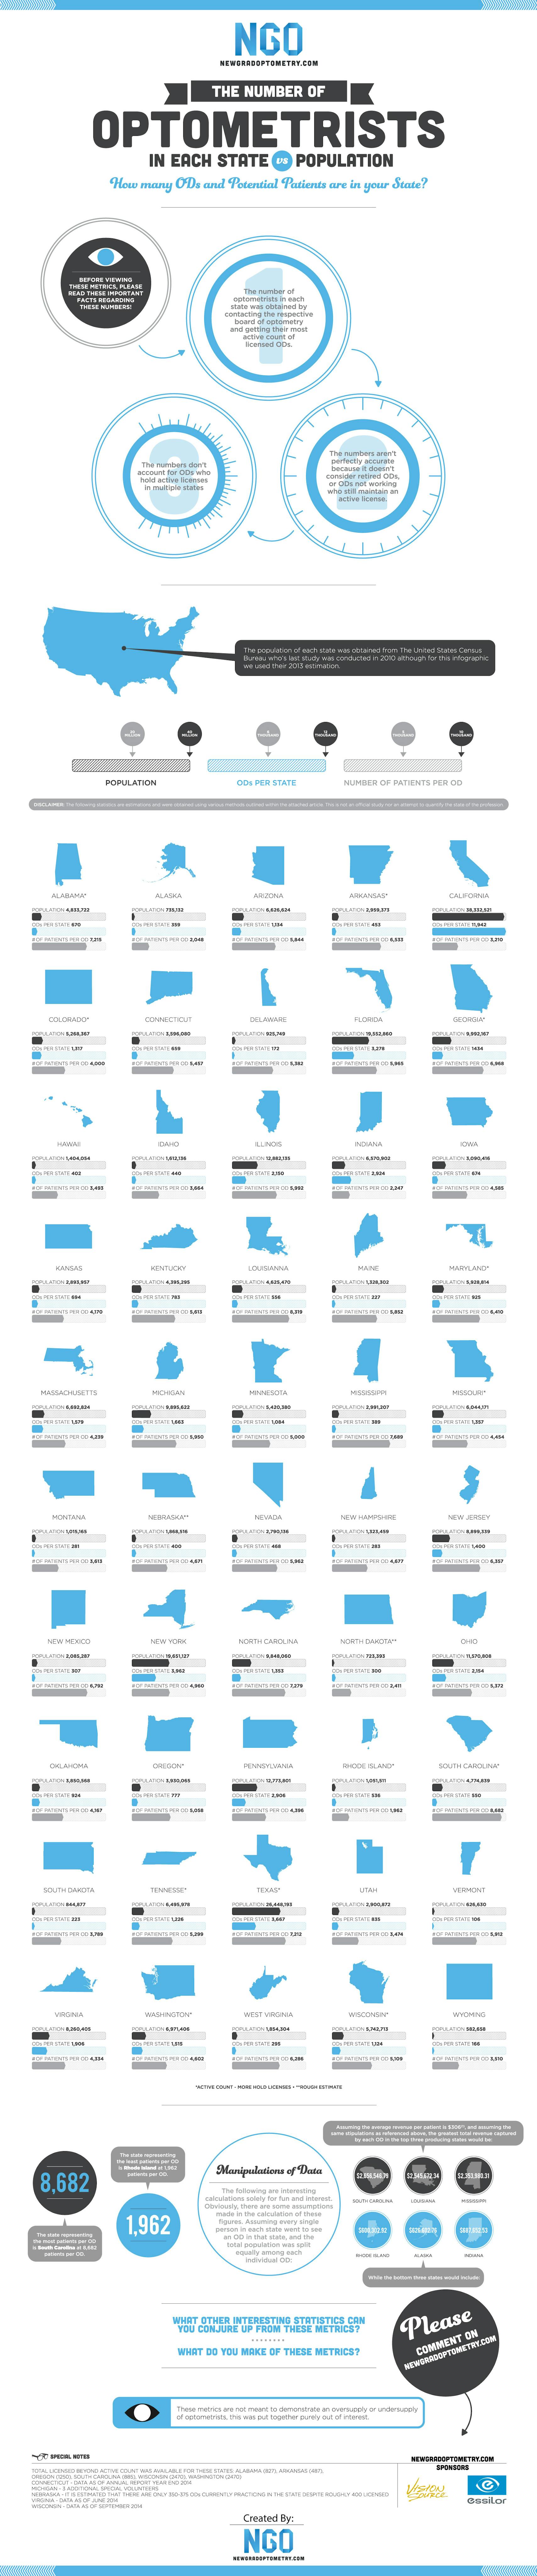 http://www.newgradoptometry.com/wp-content/uploads/2015/01/Optometrists-vs-state-population-infographic.jpg